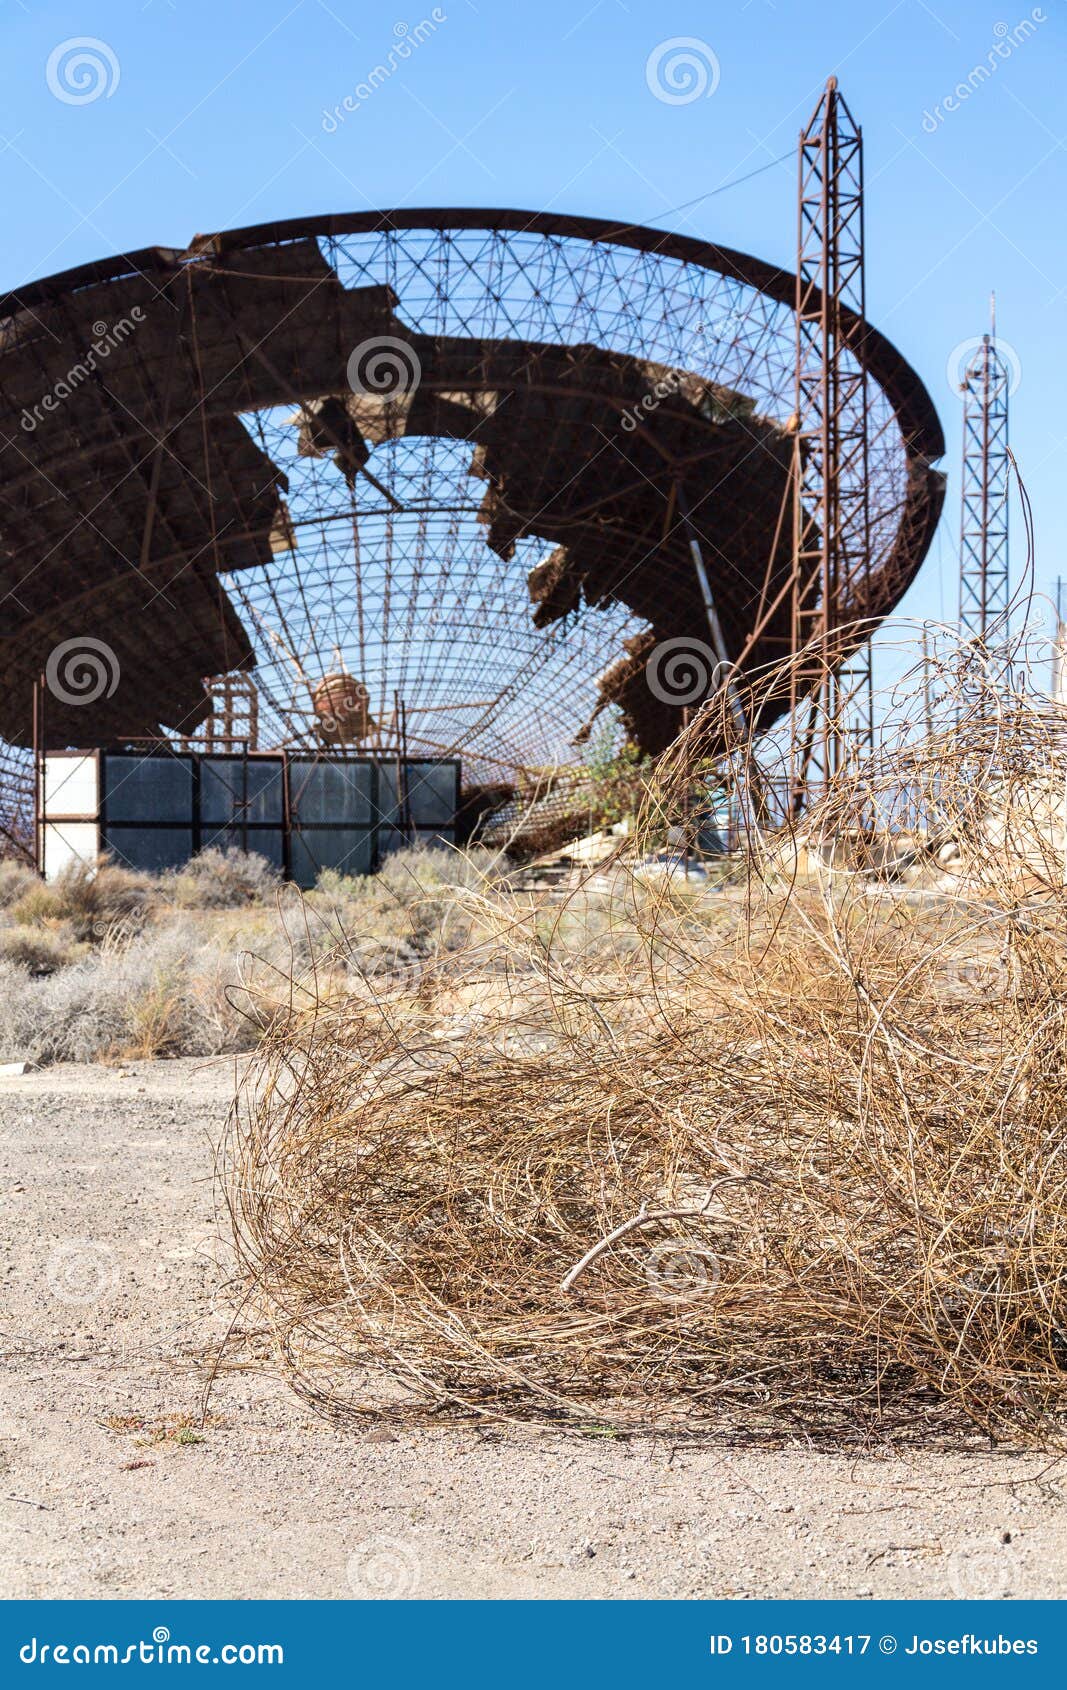 old satellite dish antenna in dry adir land near el medano, tenerife, canary islands, spain, telecommunication